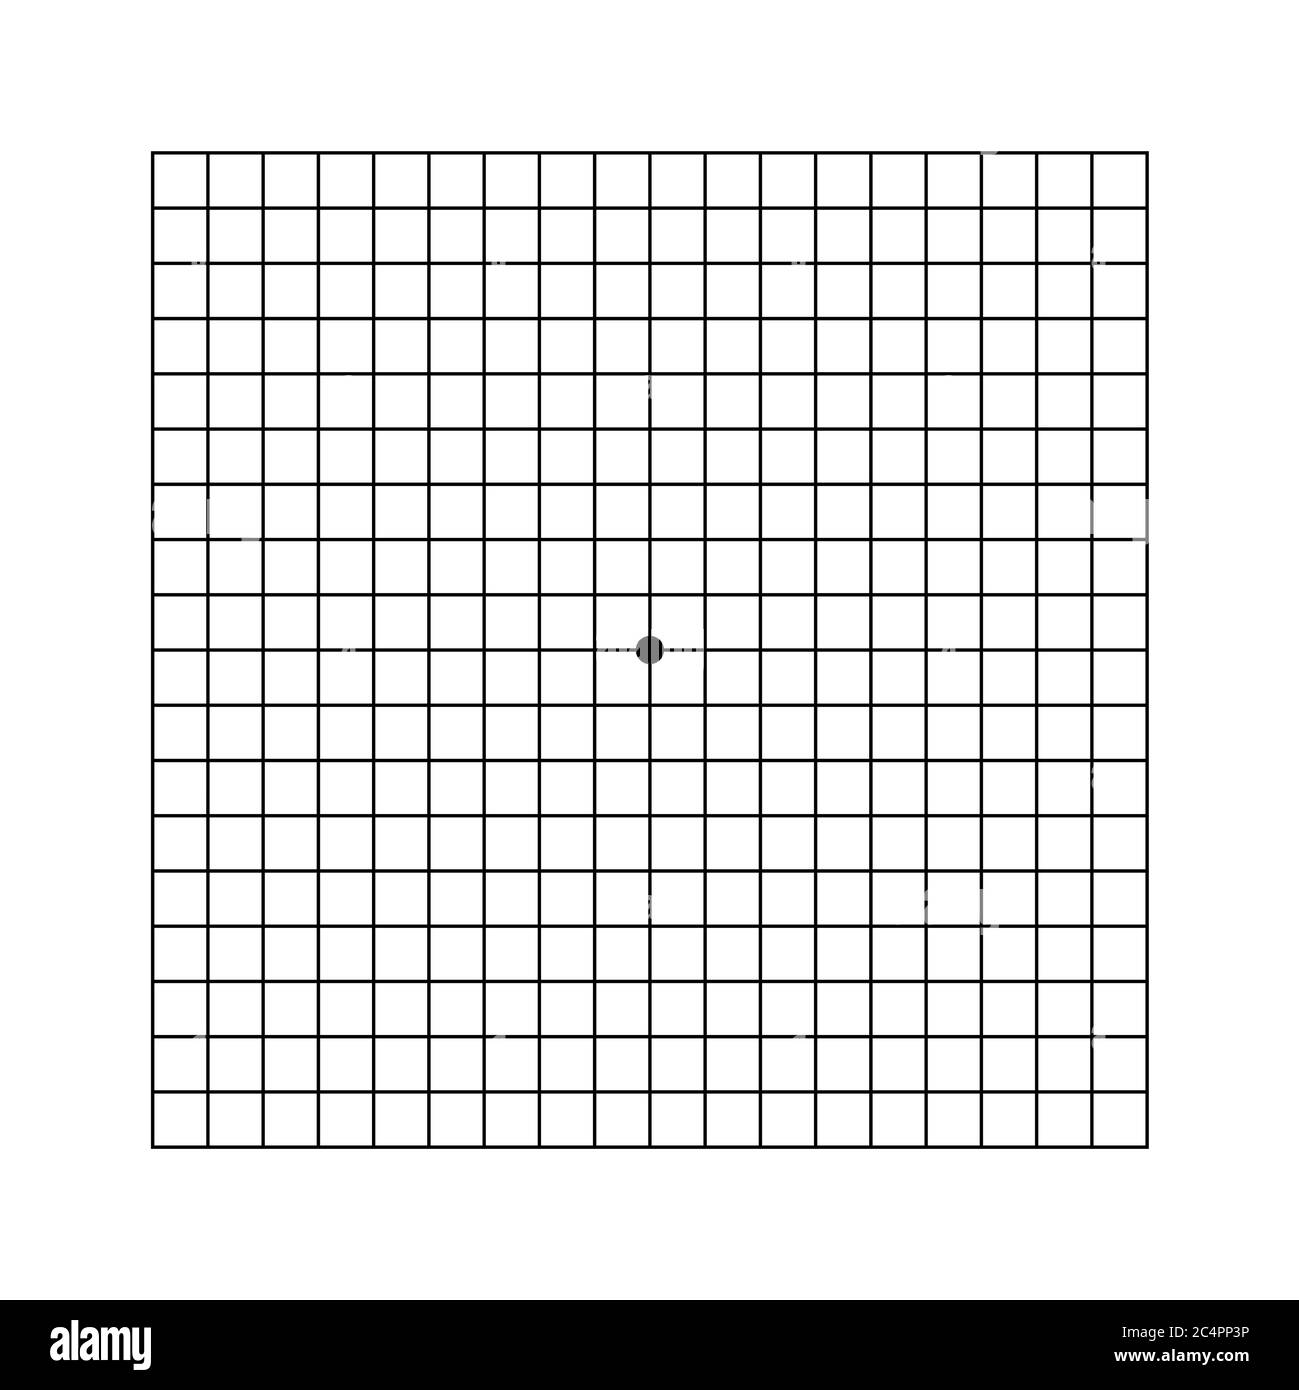 https://c8.alamy.com/comp/2C4PP3P/oculist-amsler-eye-test-grid-vector-printable-chart-retina-examination-grid-with-dot-in-centre-vision-control-2C4PP3P.jpg